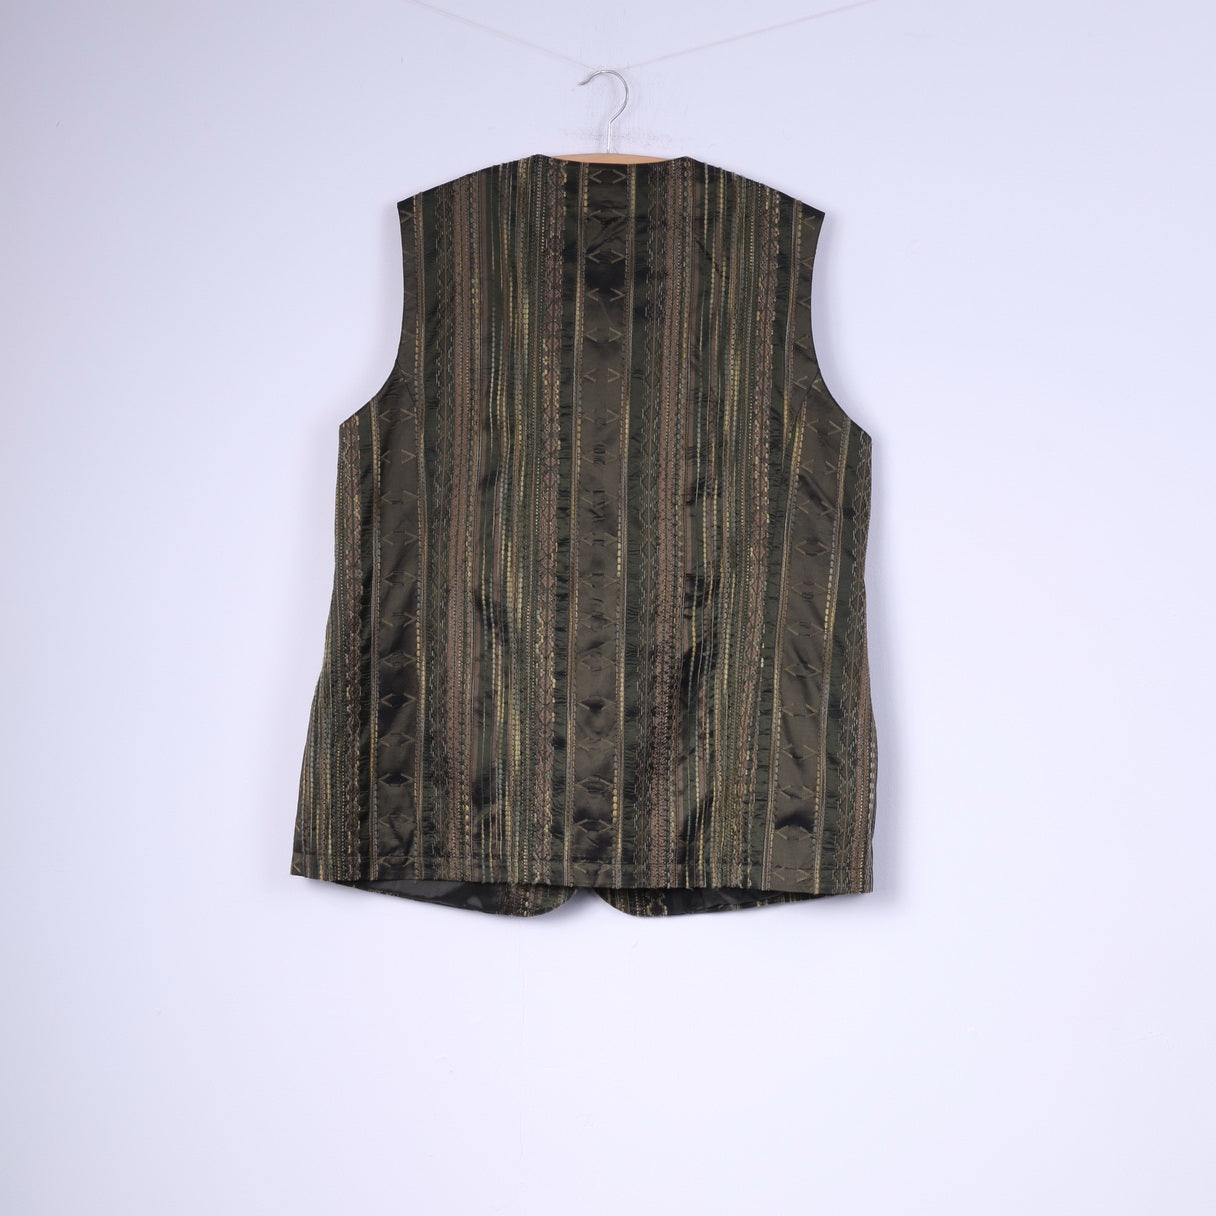 Creation Atelier Women 46 XL Waistcoat Shiny Green Striped Vintage Vest